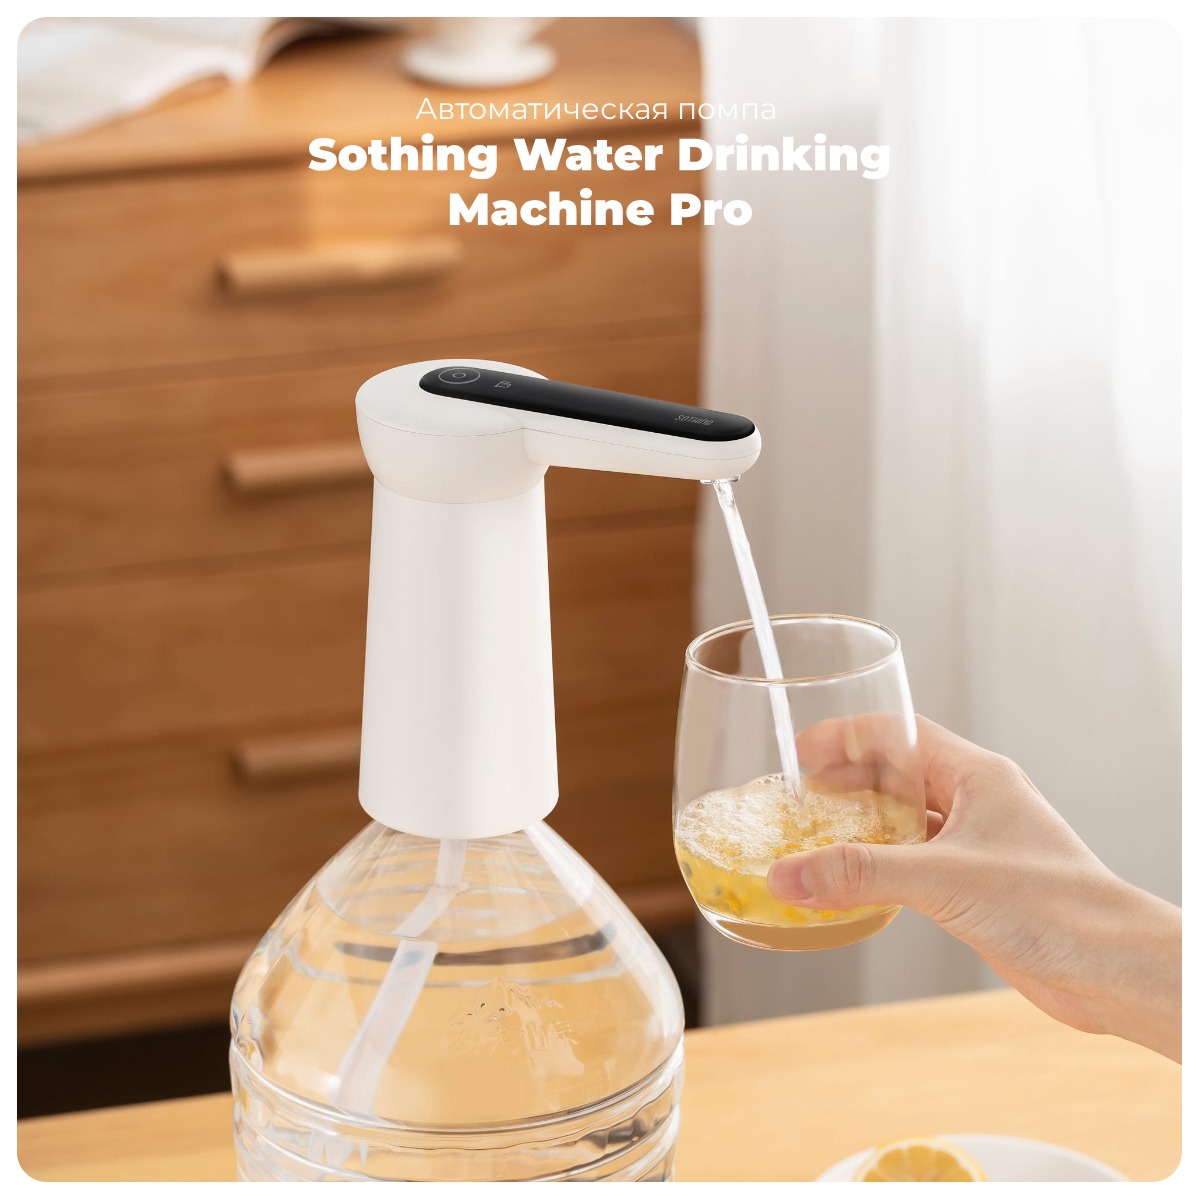 Sothing-Water-Drinking-Machine-Pro-01